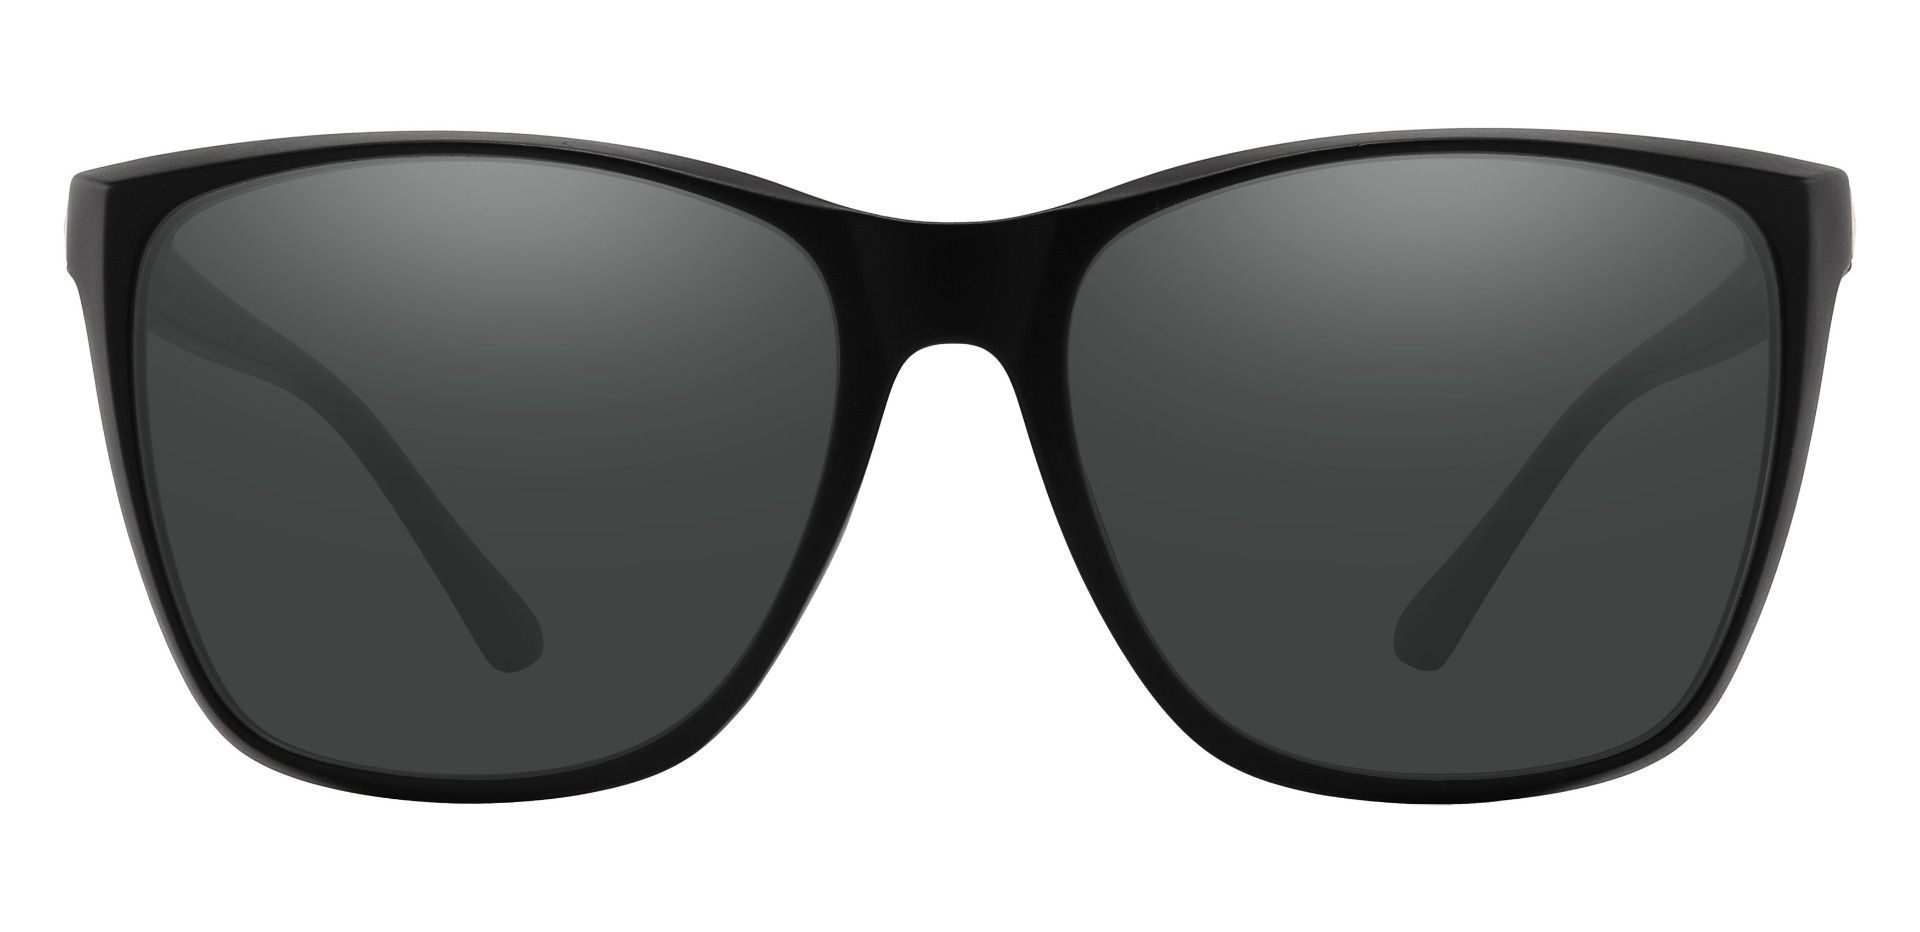 Taryn Square Prescription Sunglasses - Black Frame With Gray Lenses